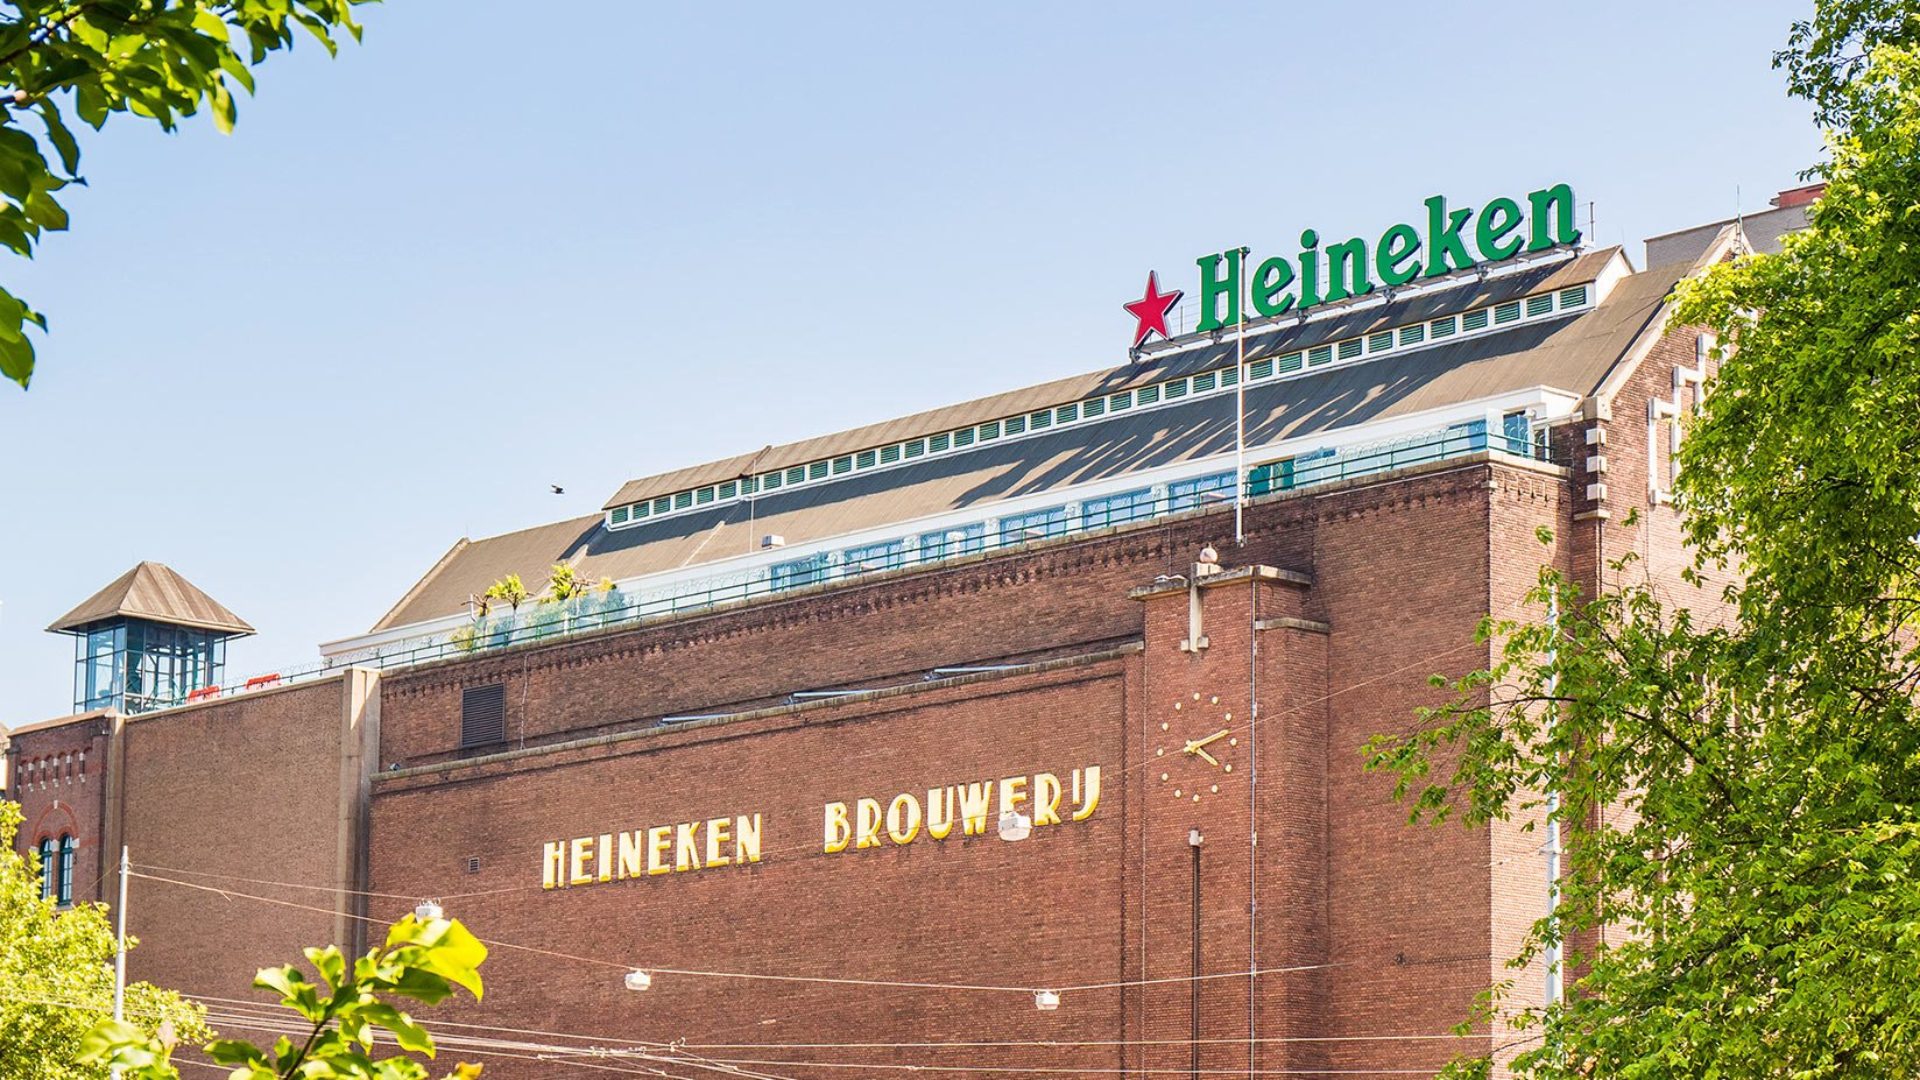 Heineken Experience/reprodução: heineken.com